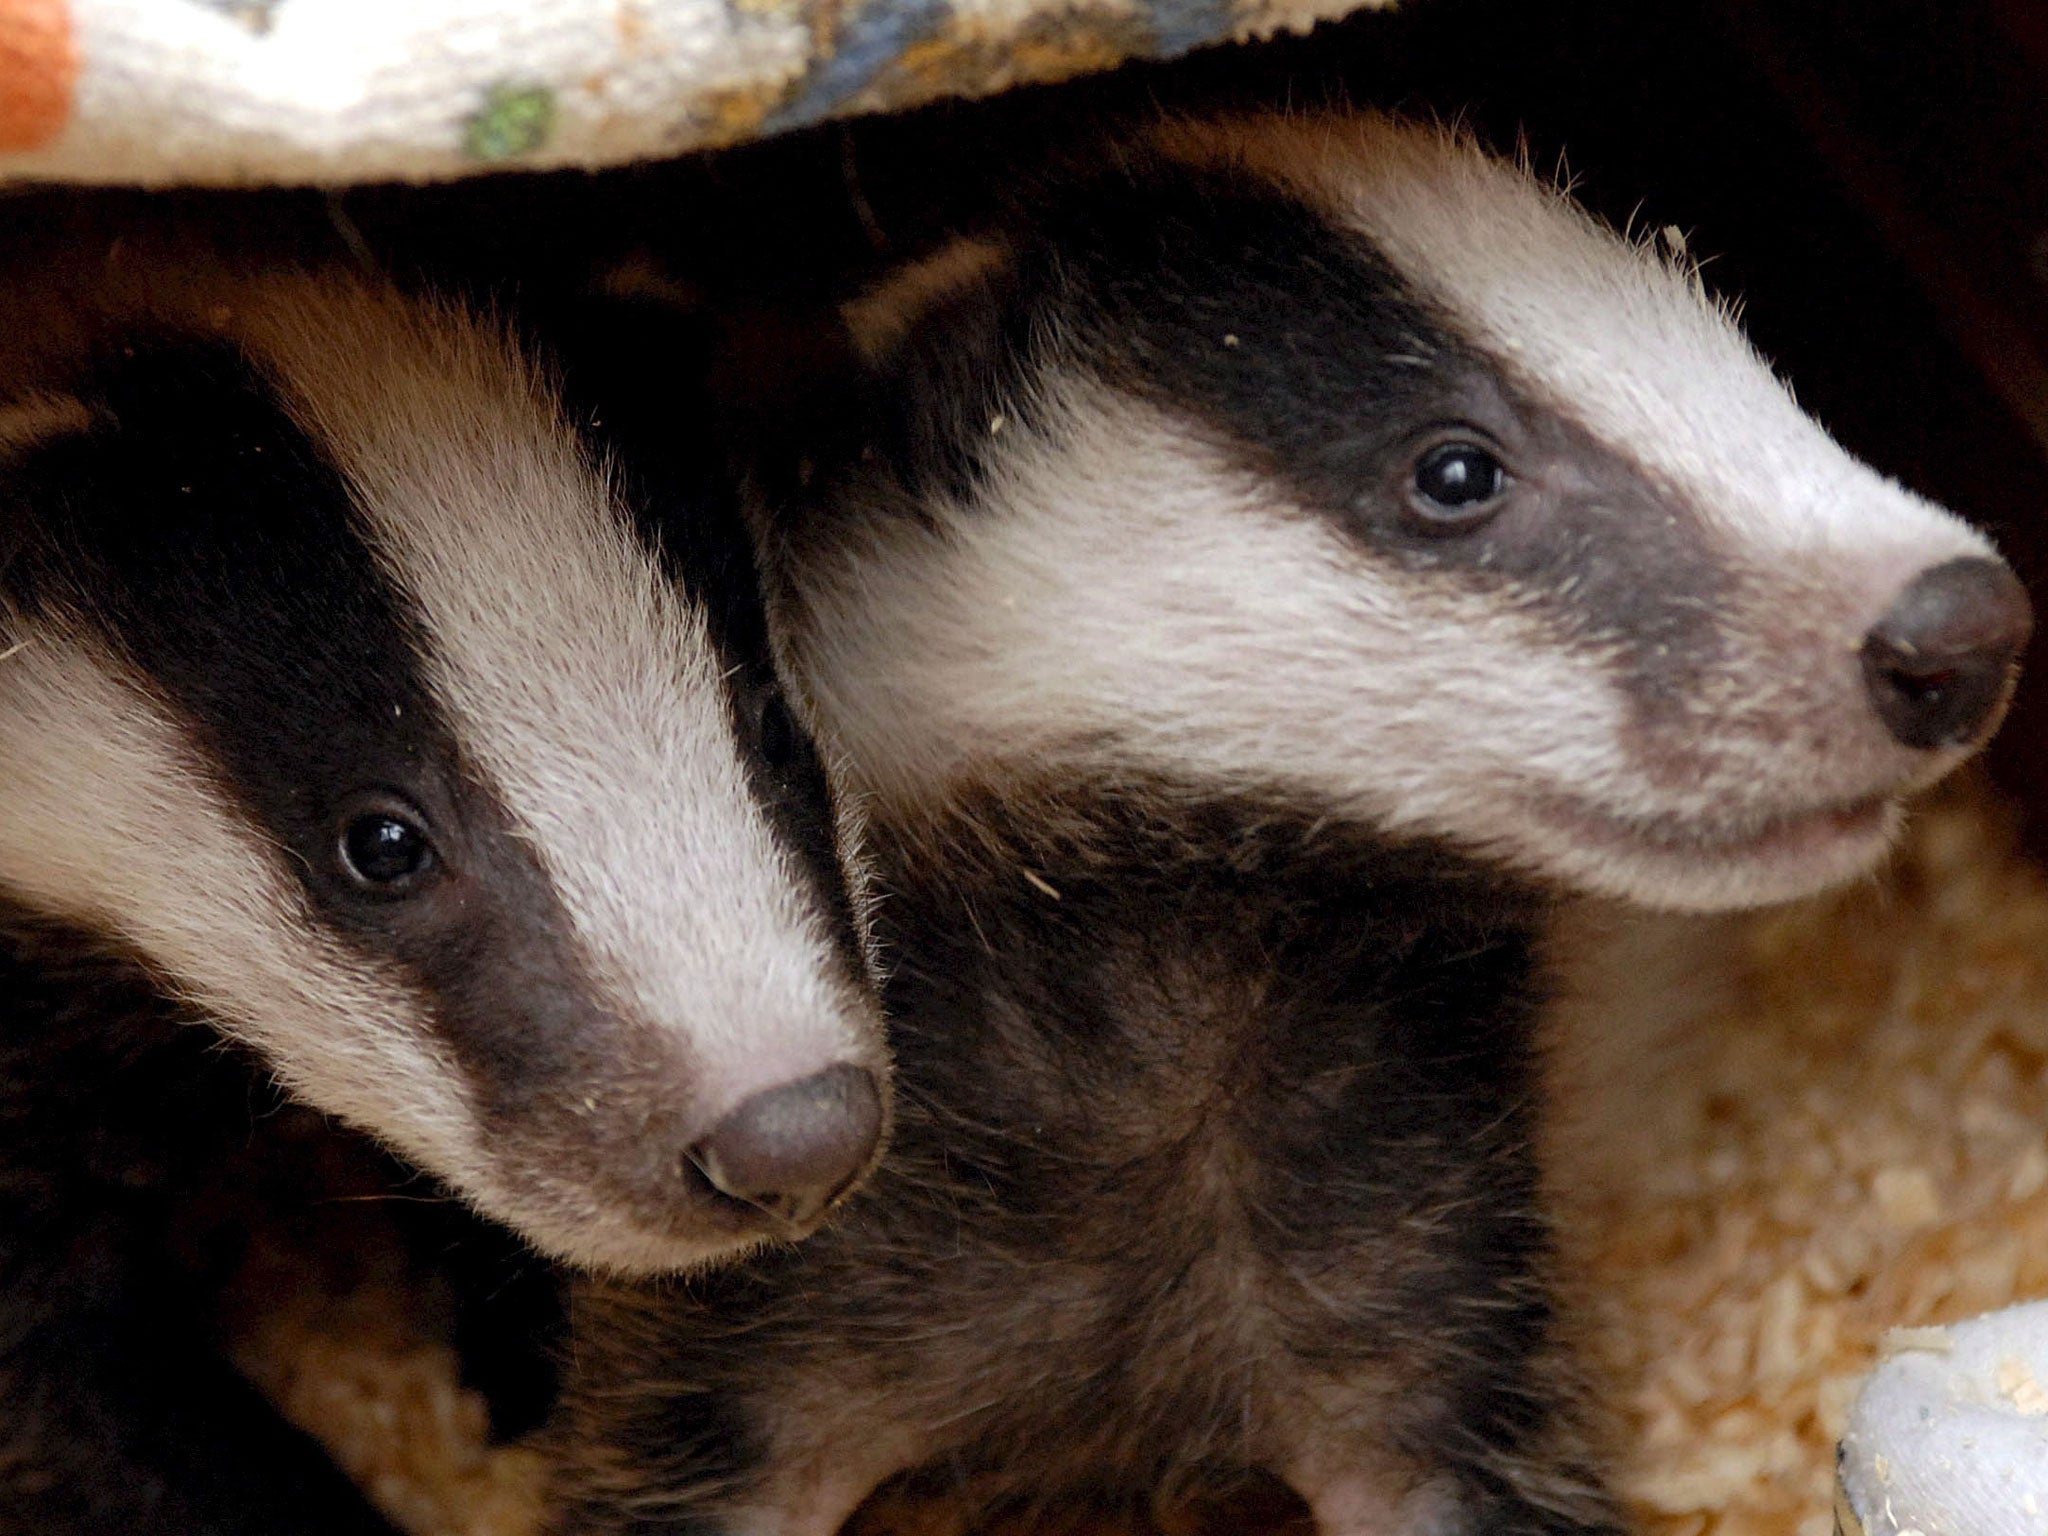 Badgers' habitats may also be in danger